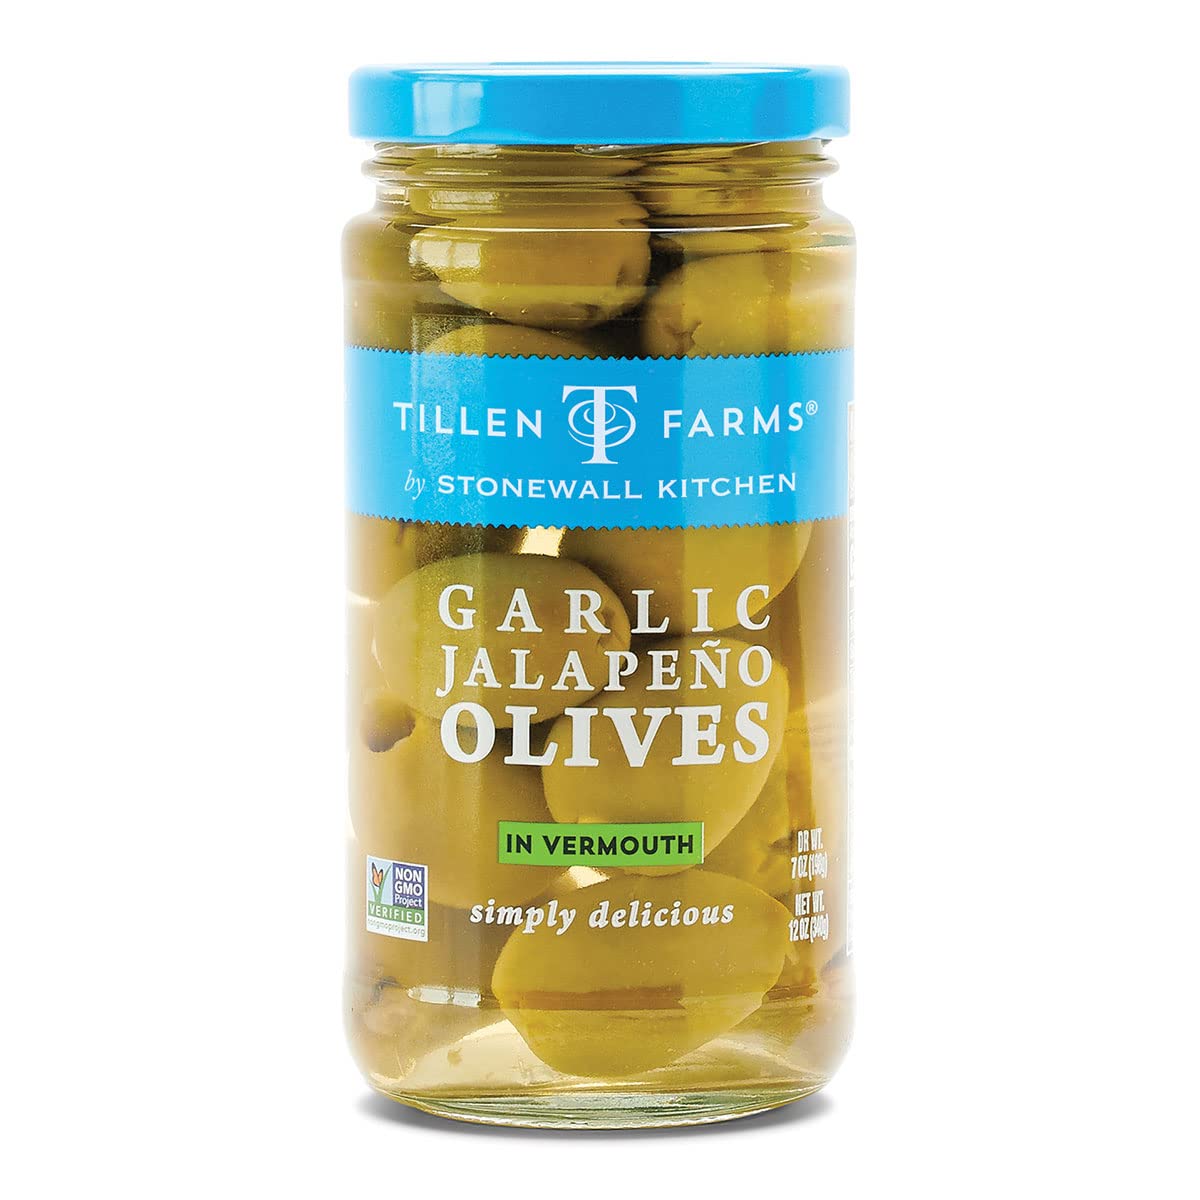 Tillen Farms Garlic Jalapeno Stuffed Olives in Vermouth 340gm (12oz)